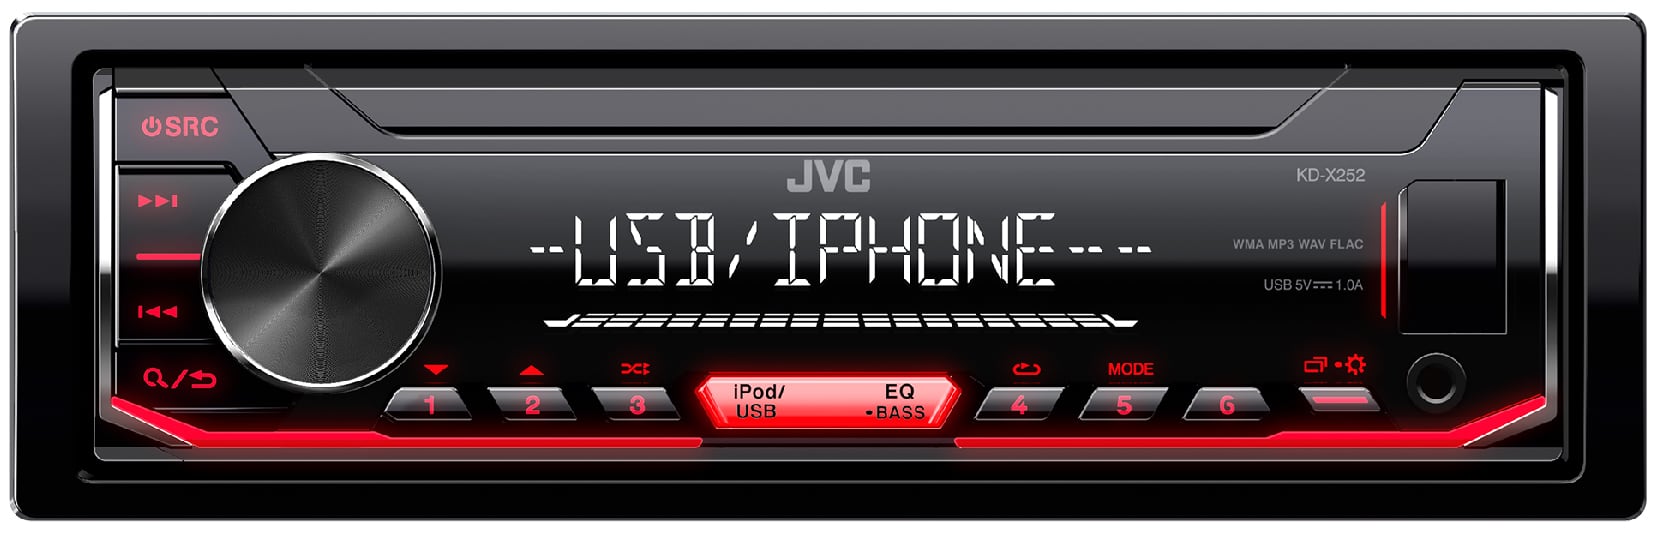 Autoradio JVC lecteur CD BLUETOOTH 4X50W